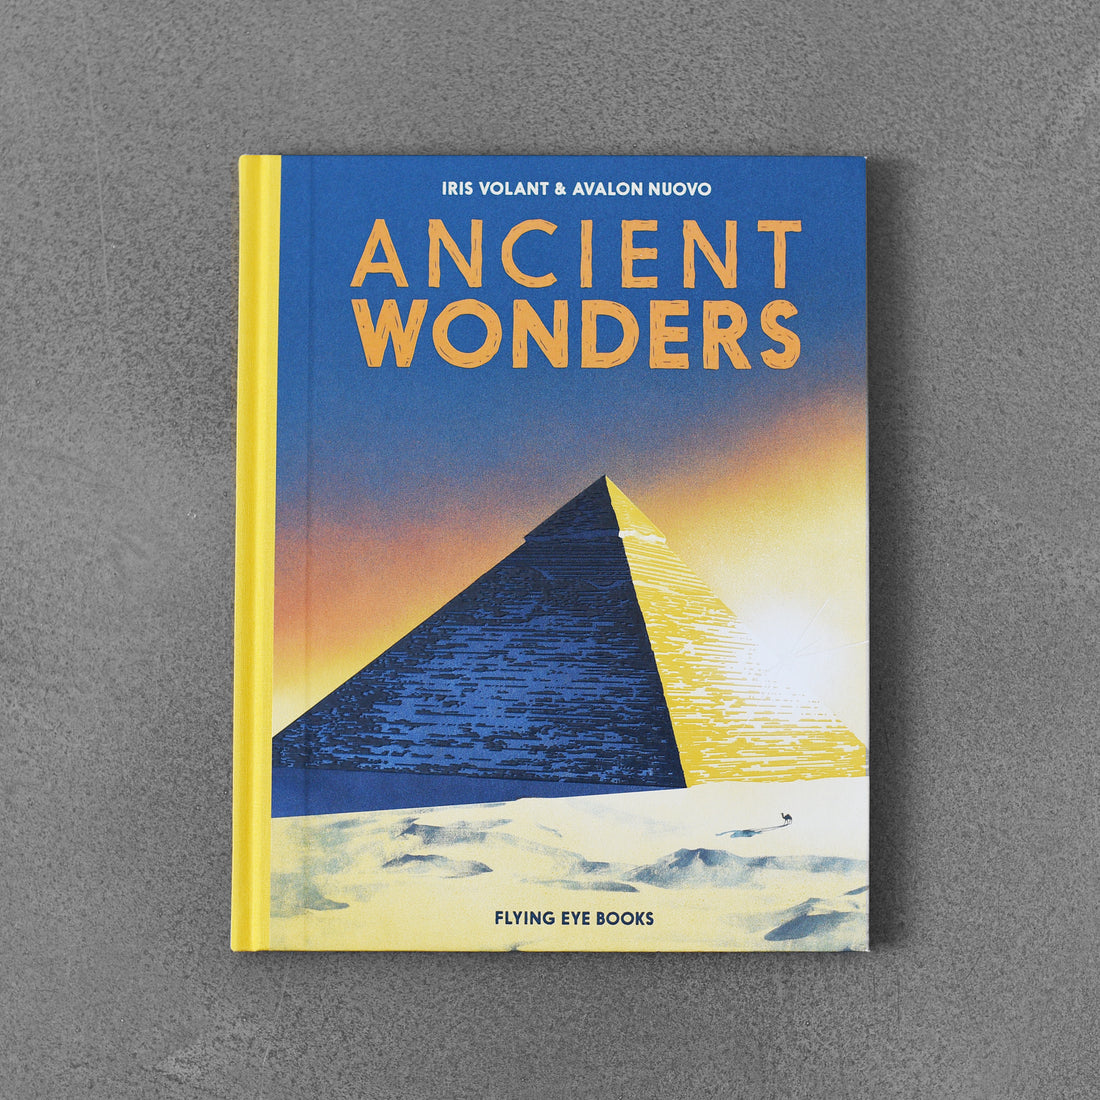 Ancient Wonders - Iris Volant & Avalon Nuovo